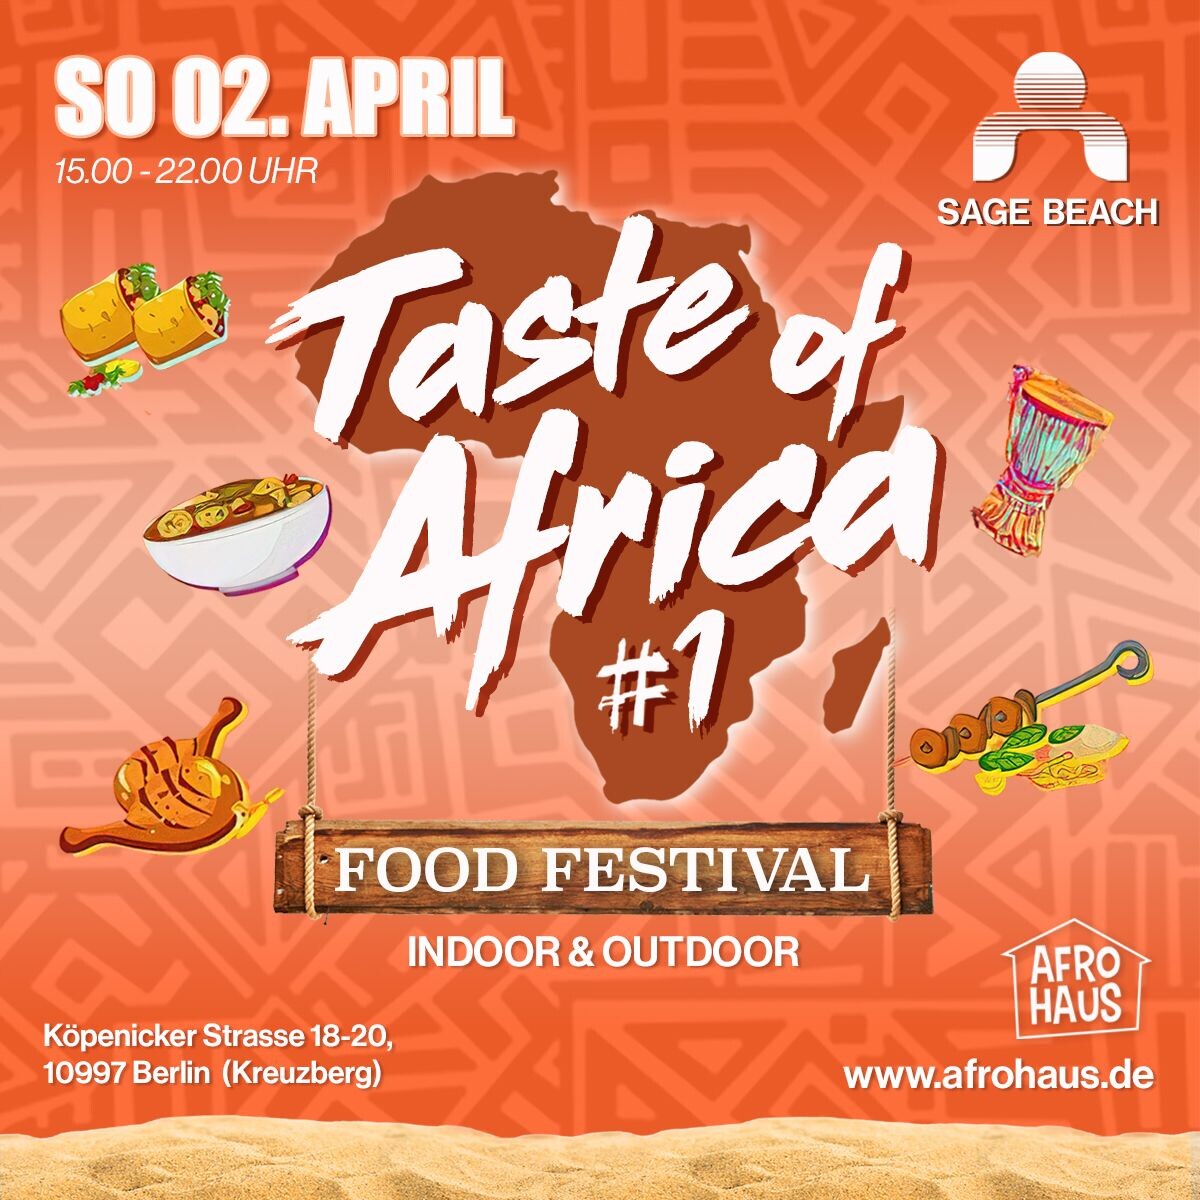 Sage Beach 02.04.2023 Taste of Africa- Food-Festival